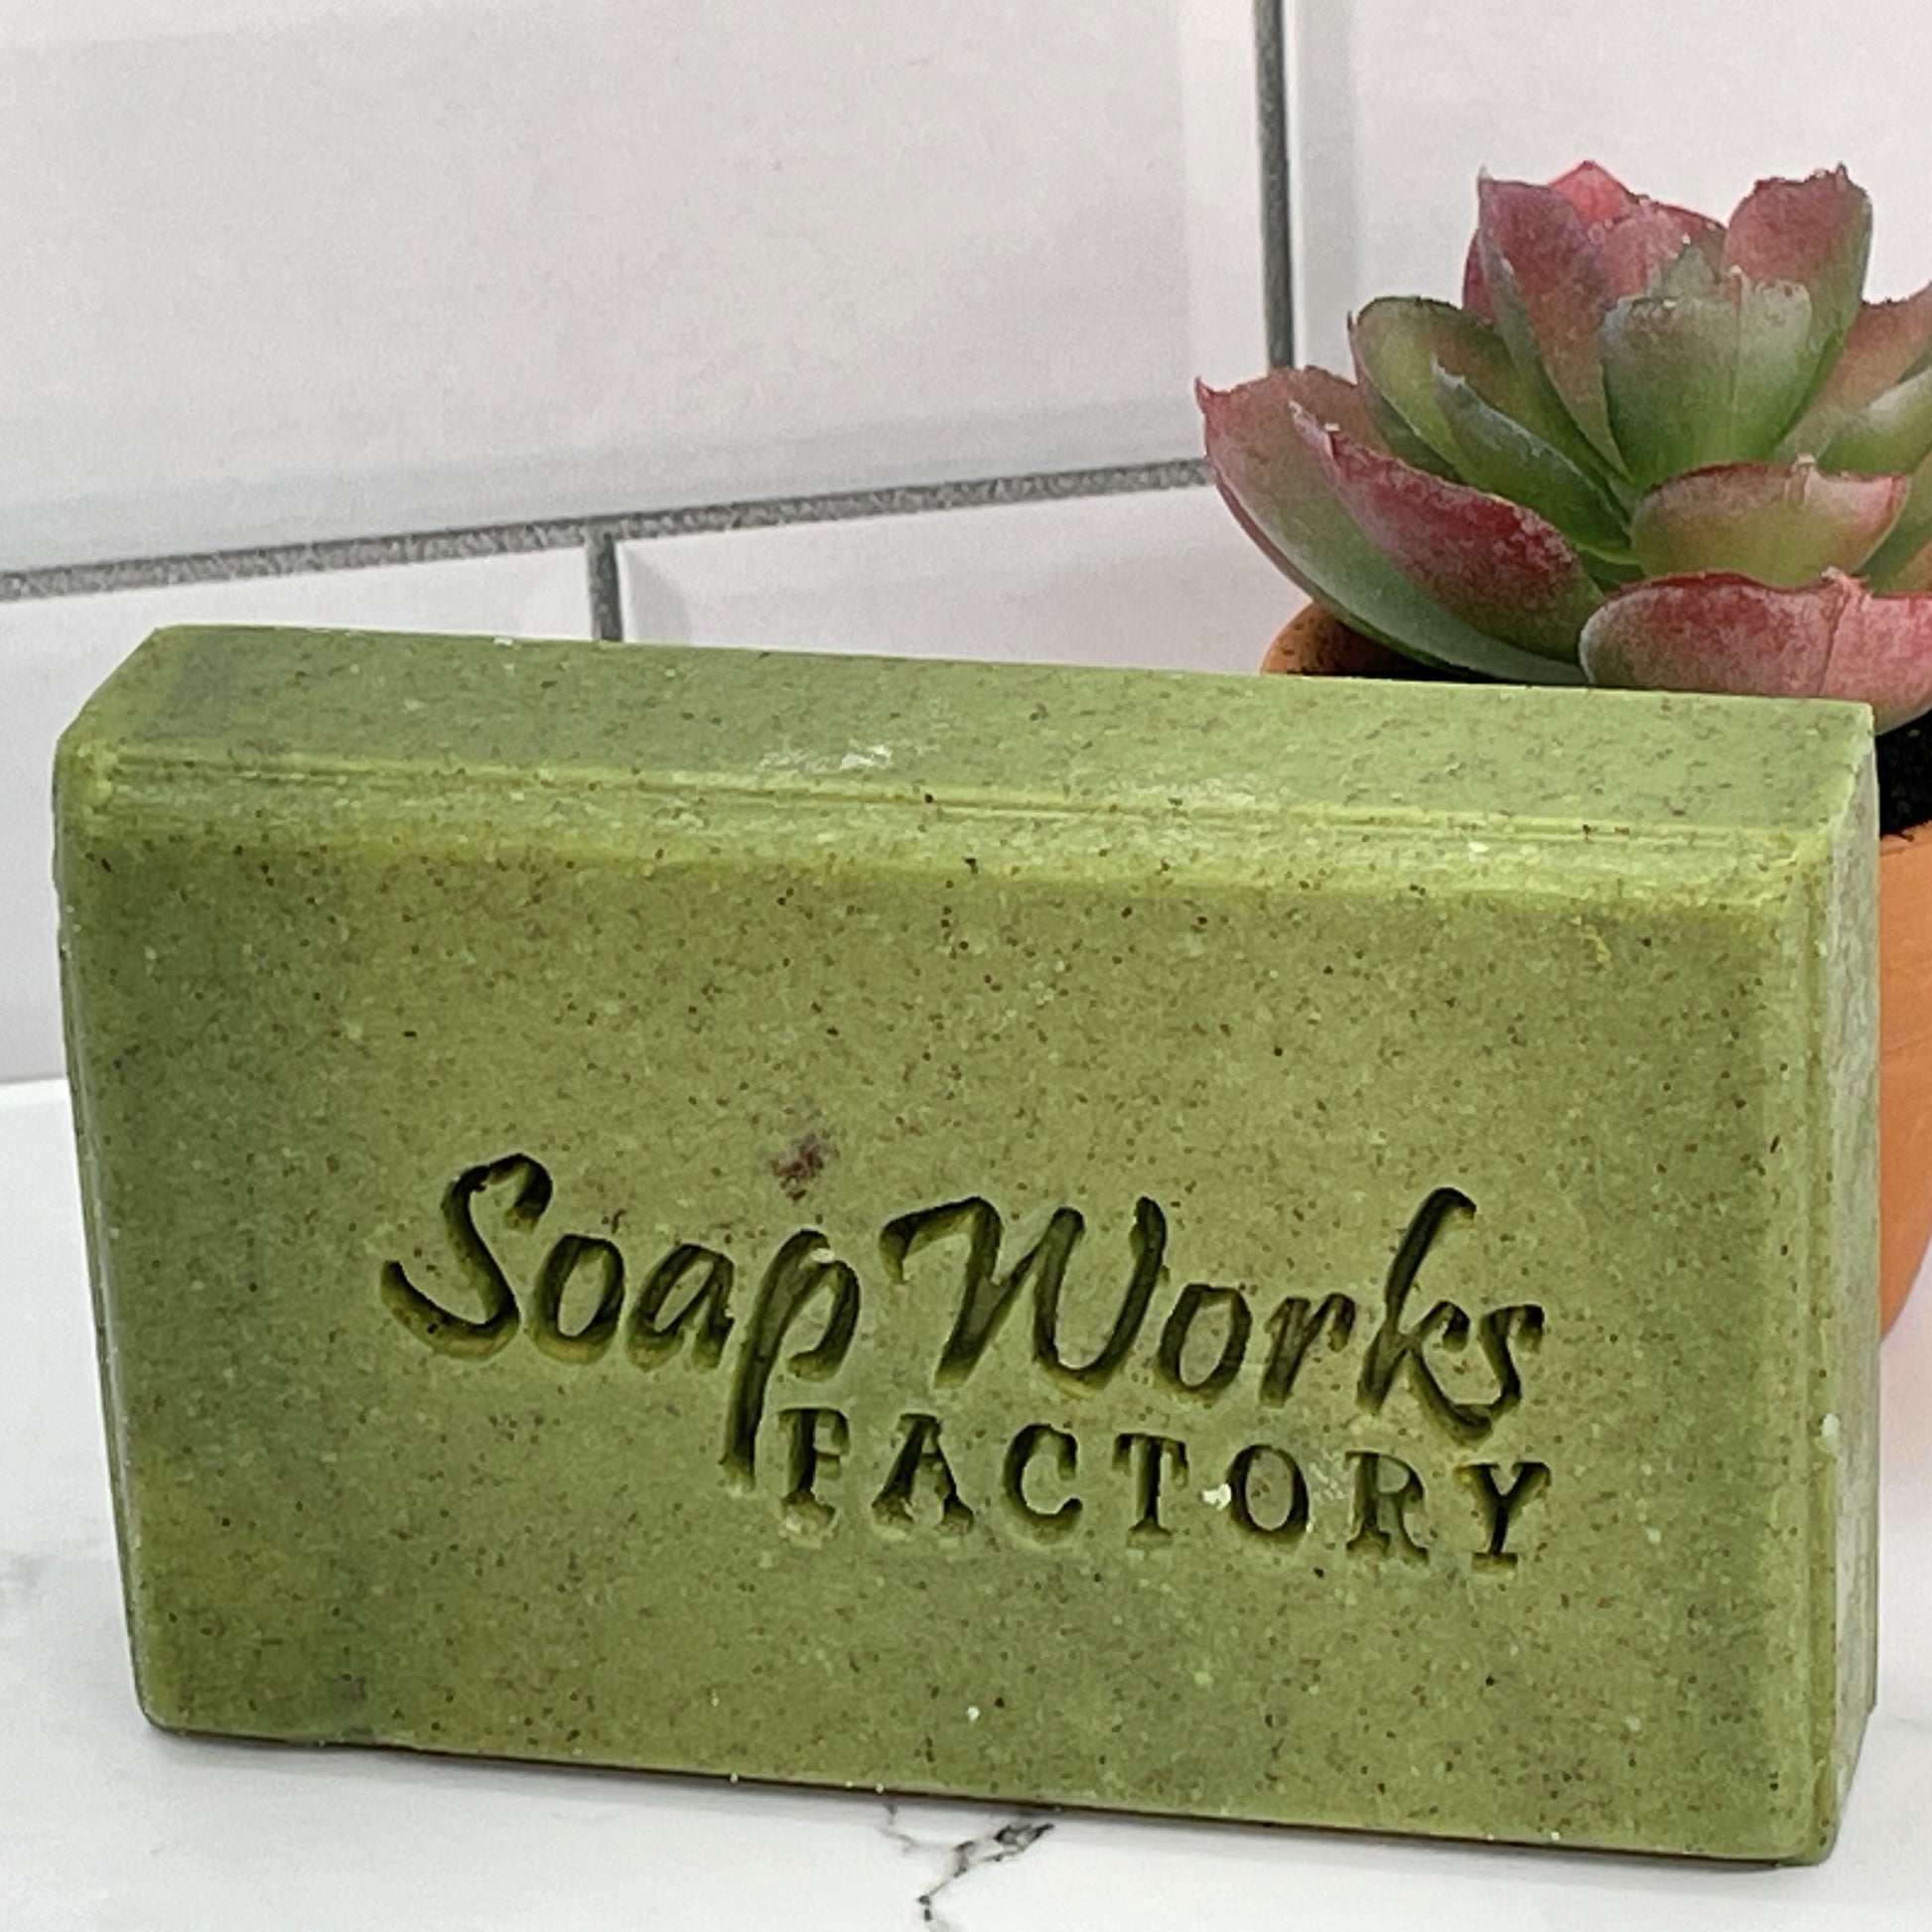 soap that cleans dirt